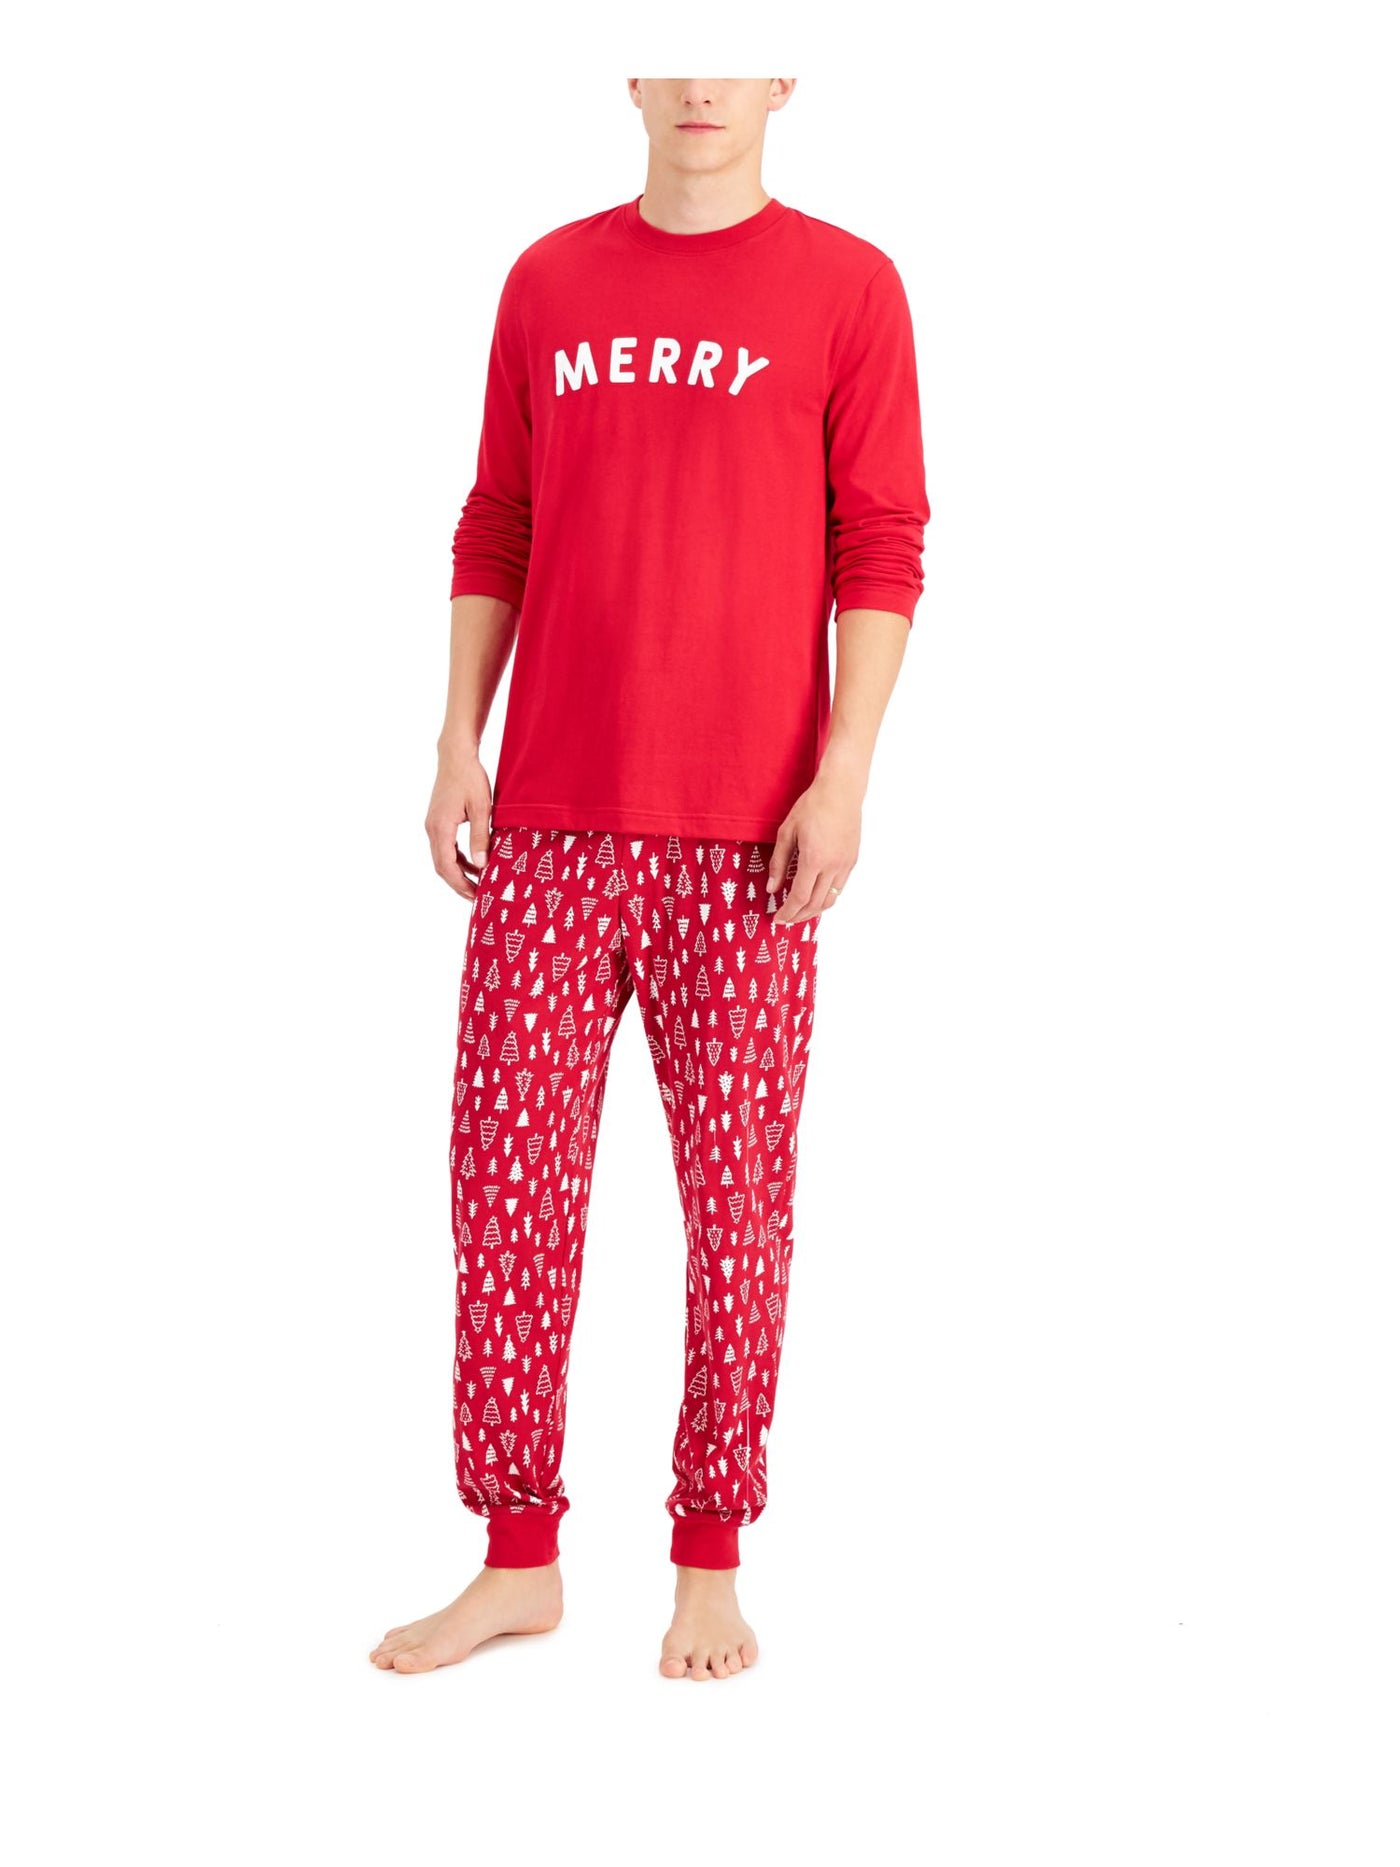 FAMILY PJs Mens Red Printed Elastic Band Long Sleeve T-Shirt Top Cuffed Pants Pajamas M